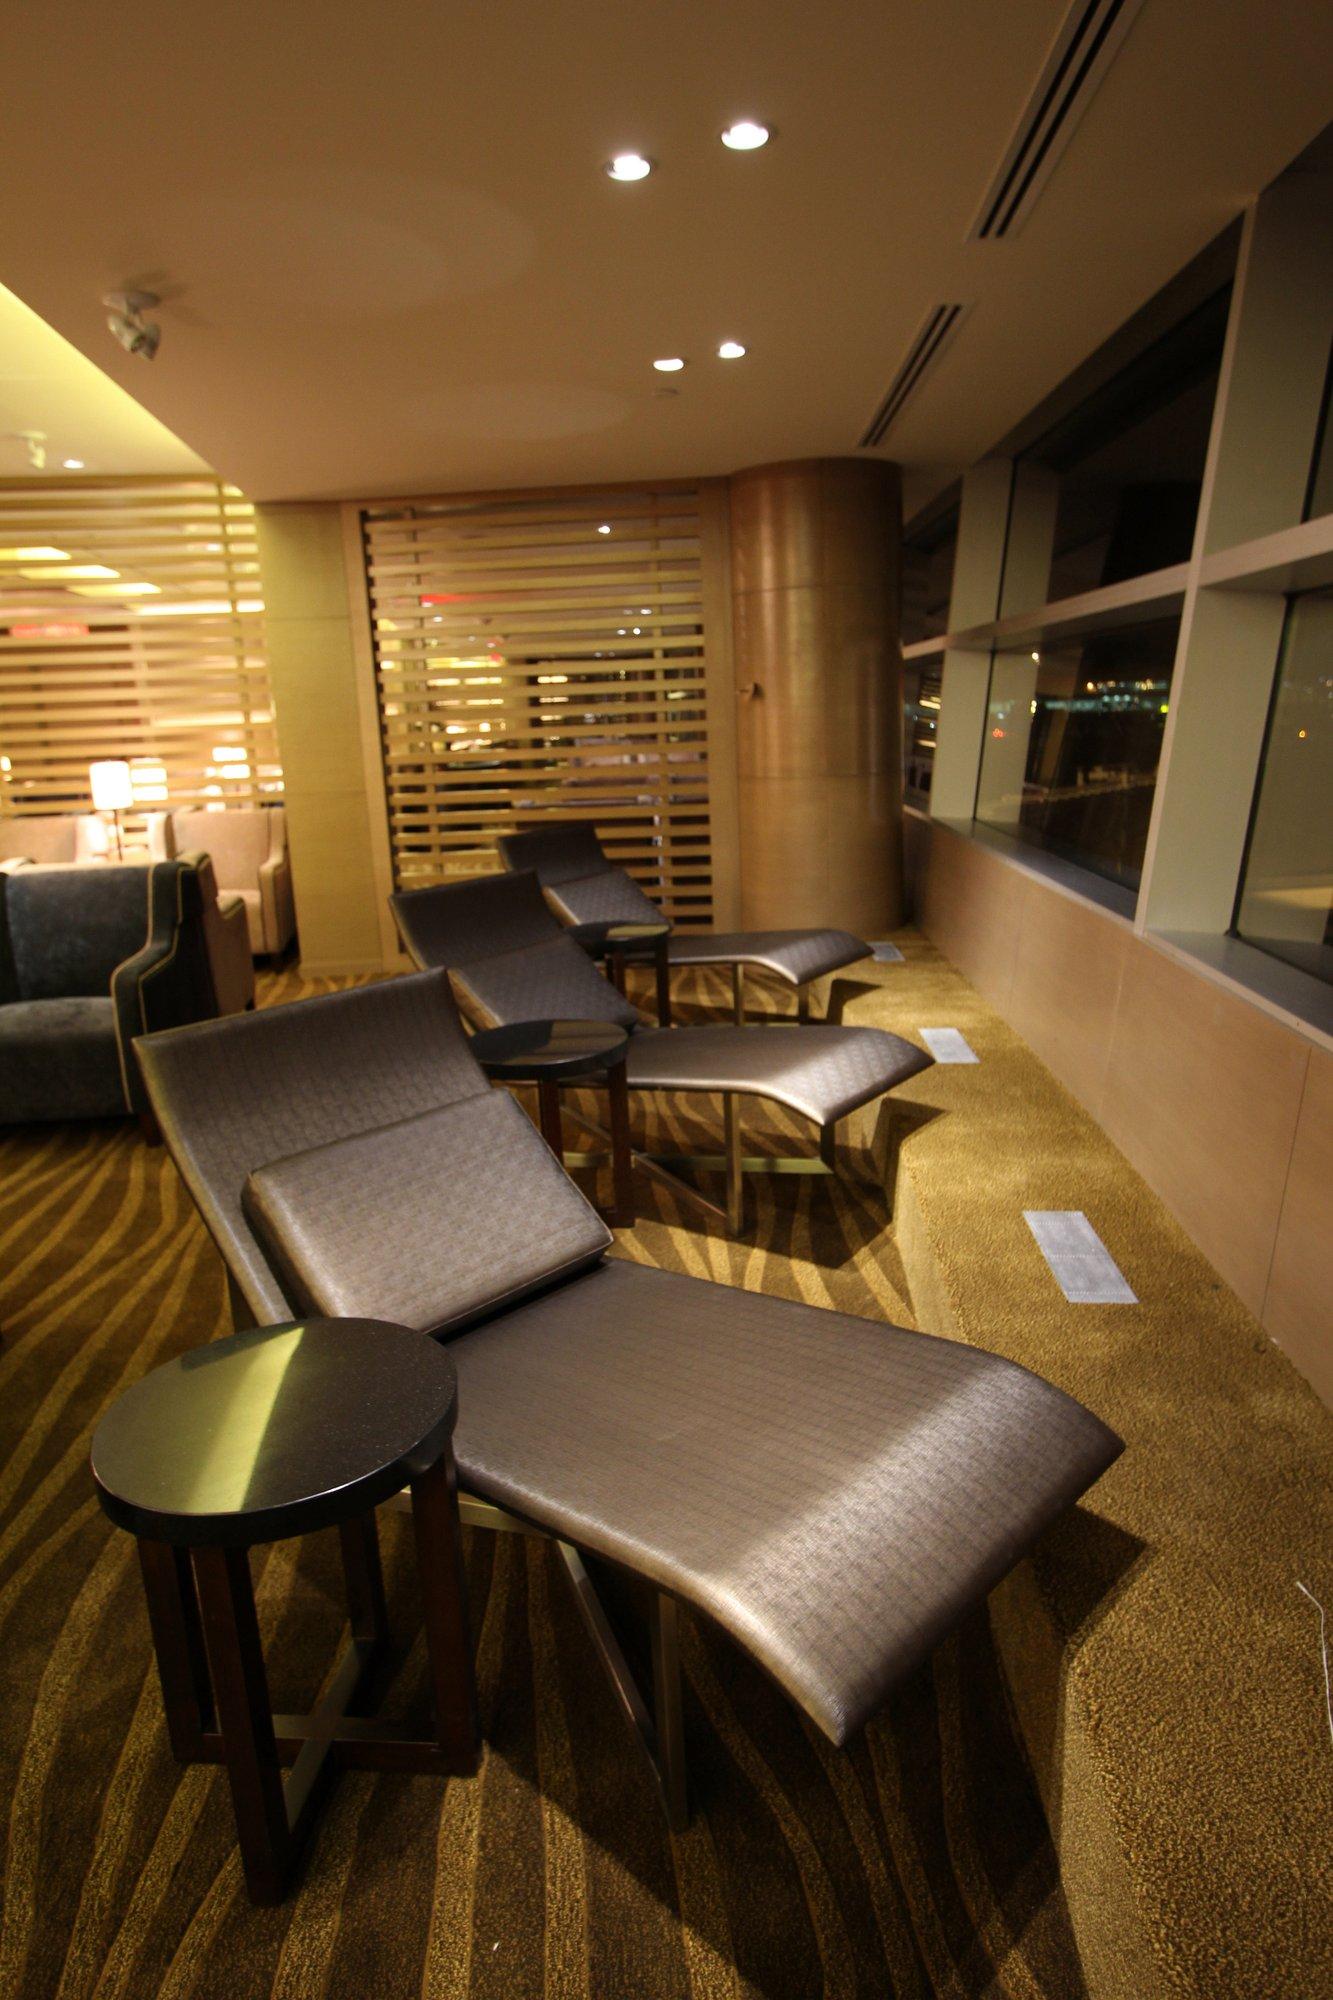 Plaza Premium Lounge image 47 of 48